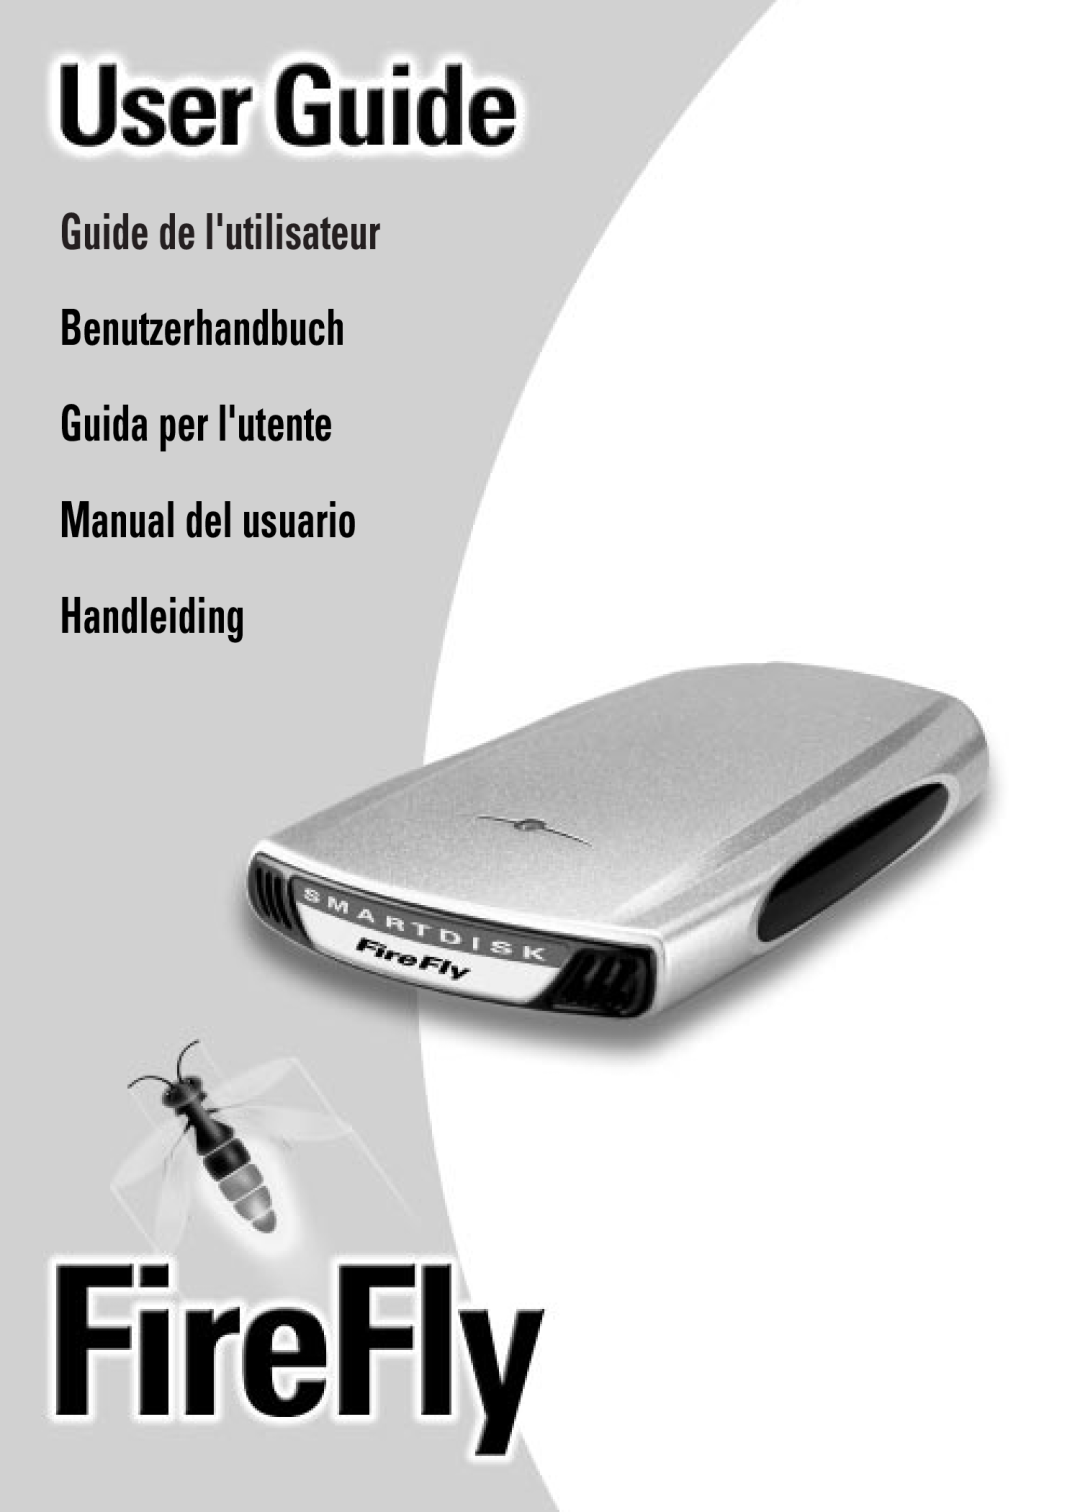 SmartDisk Computer Hard Drive manual Guide de lutilisateur 